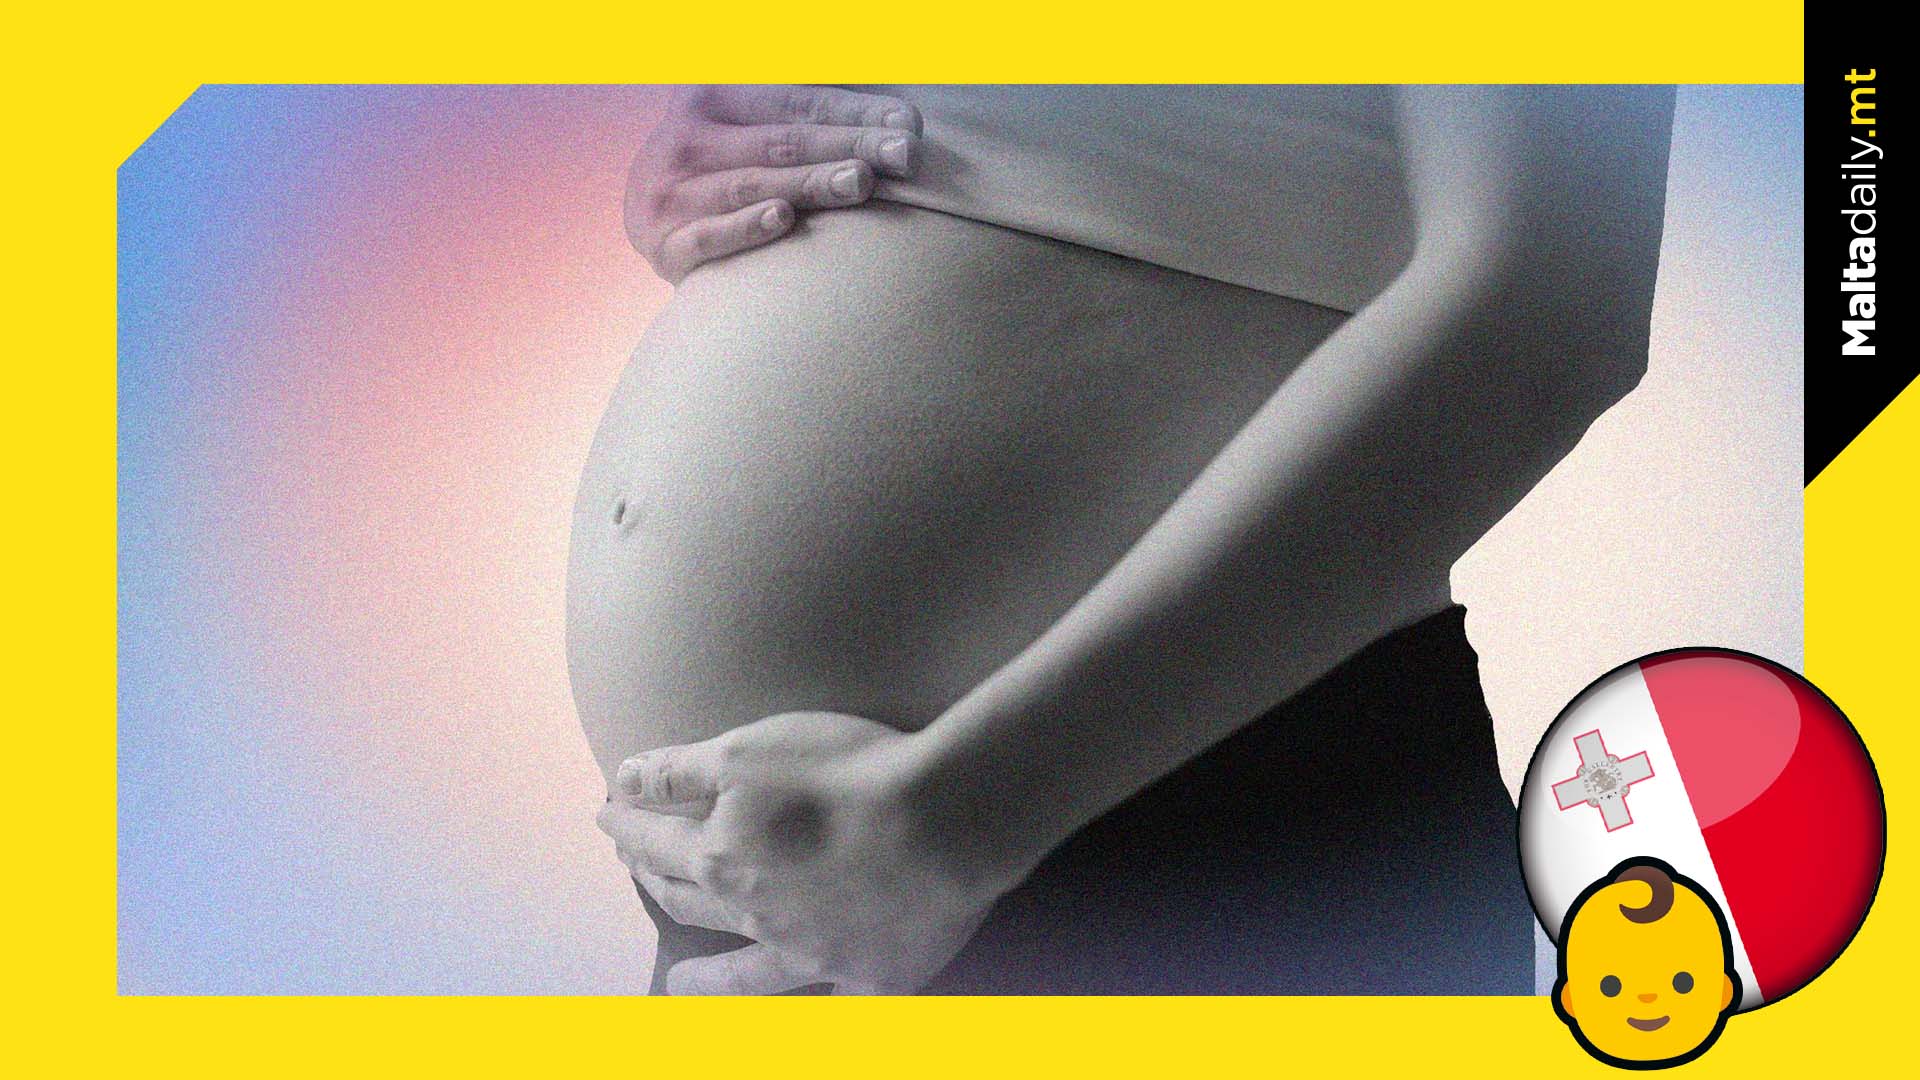 Malta has lowest fertility rate in EU at 1.13 live births per woman